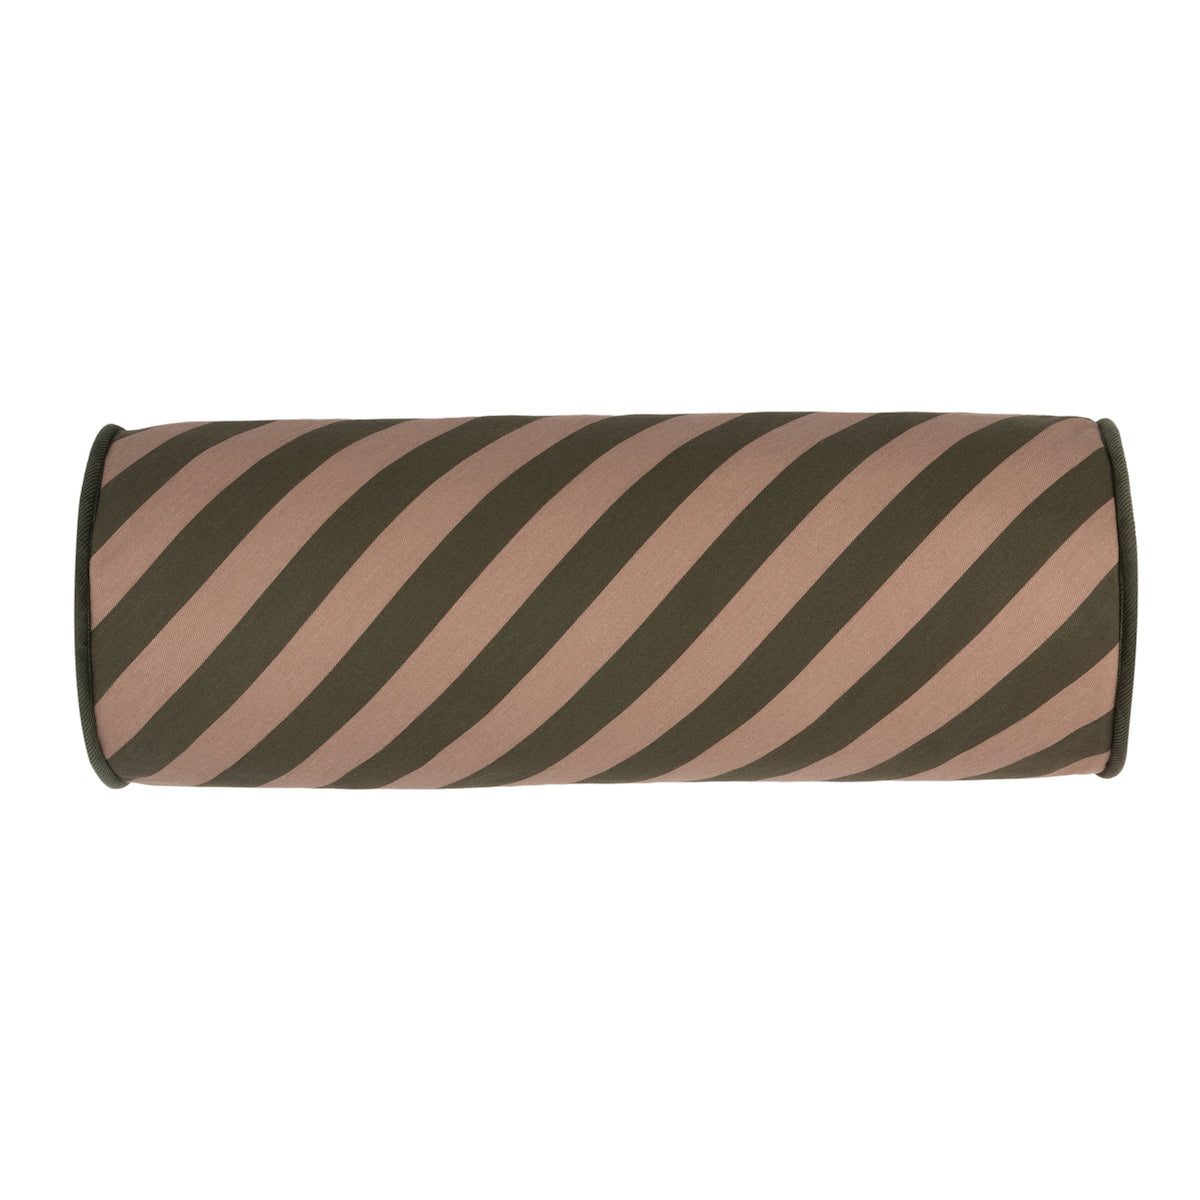 Nobodinoz Majestic Cylindric Cushion - Green Taupe Stripes